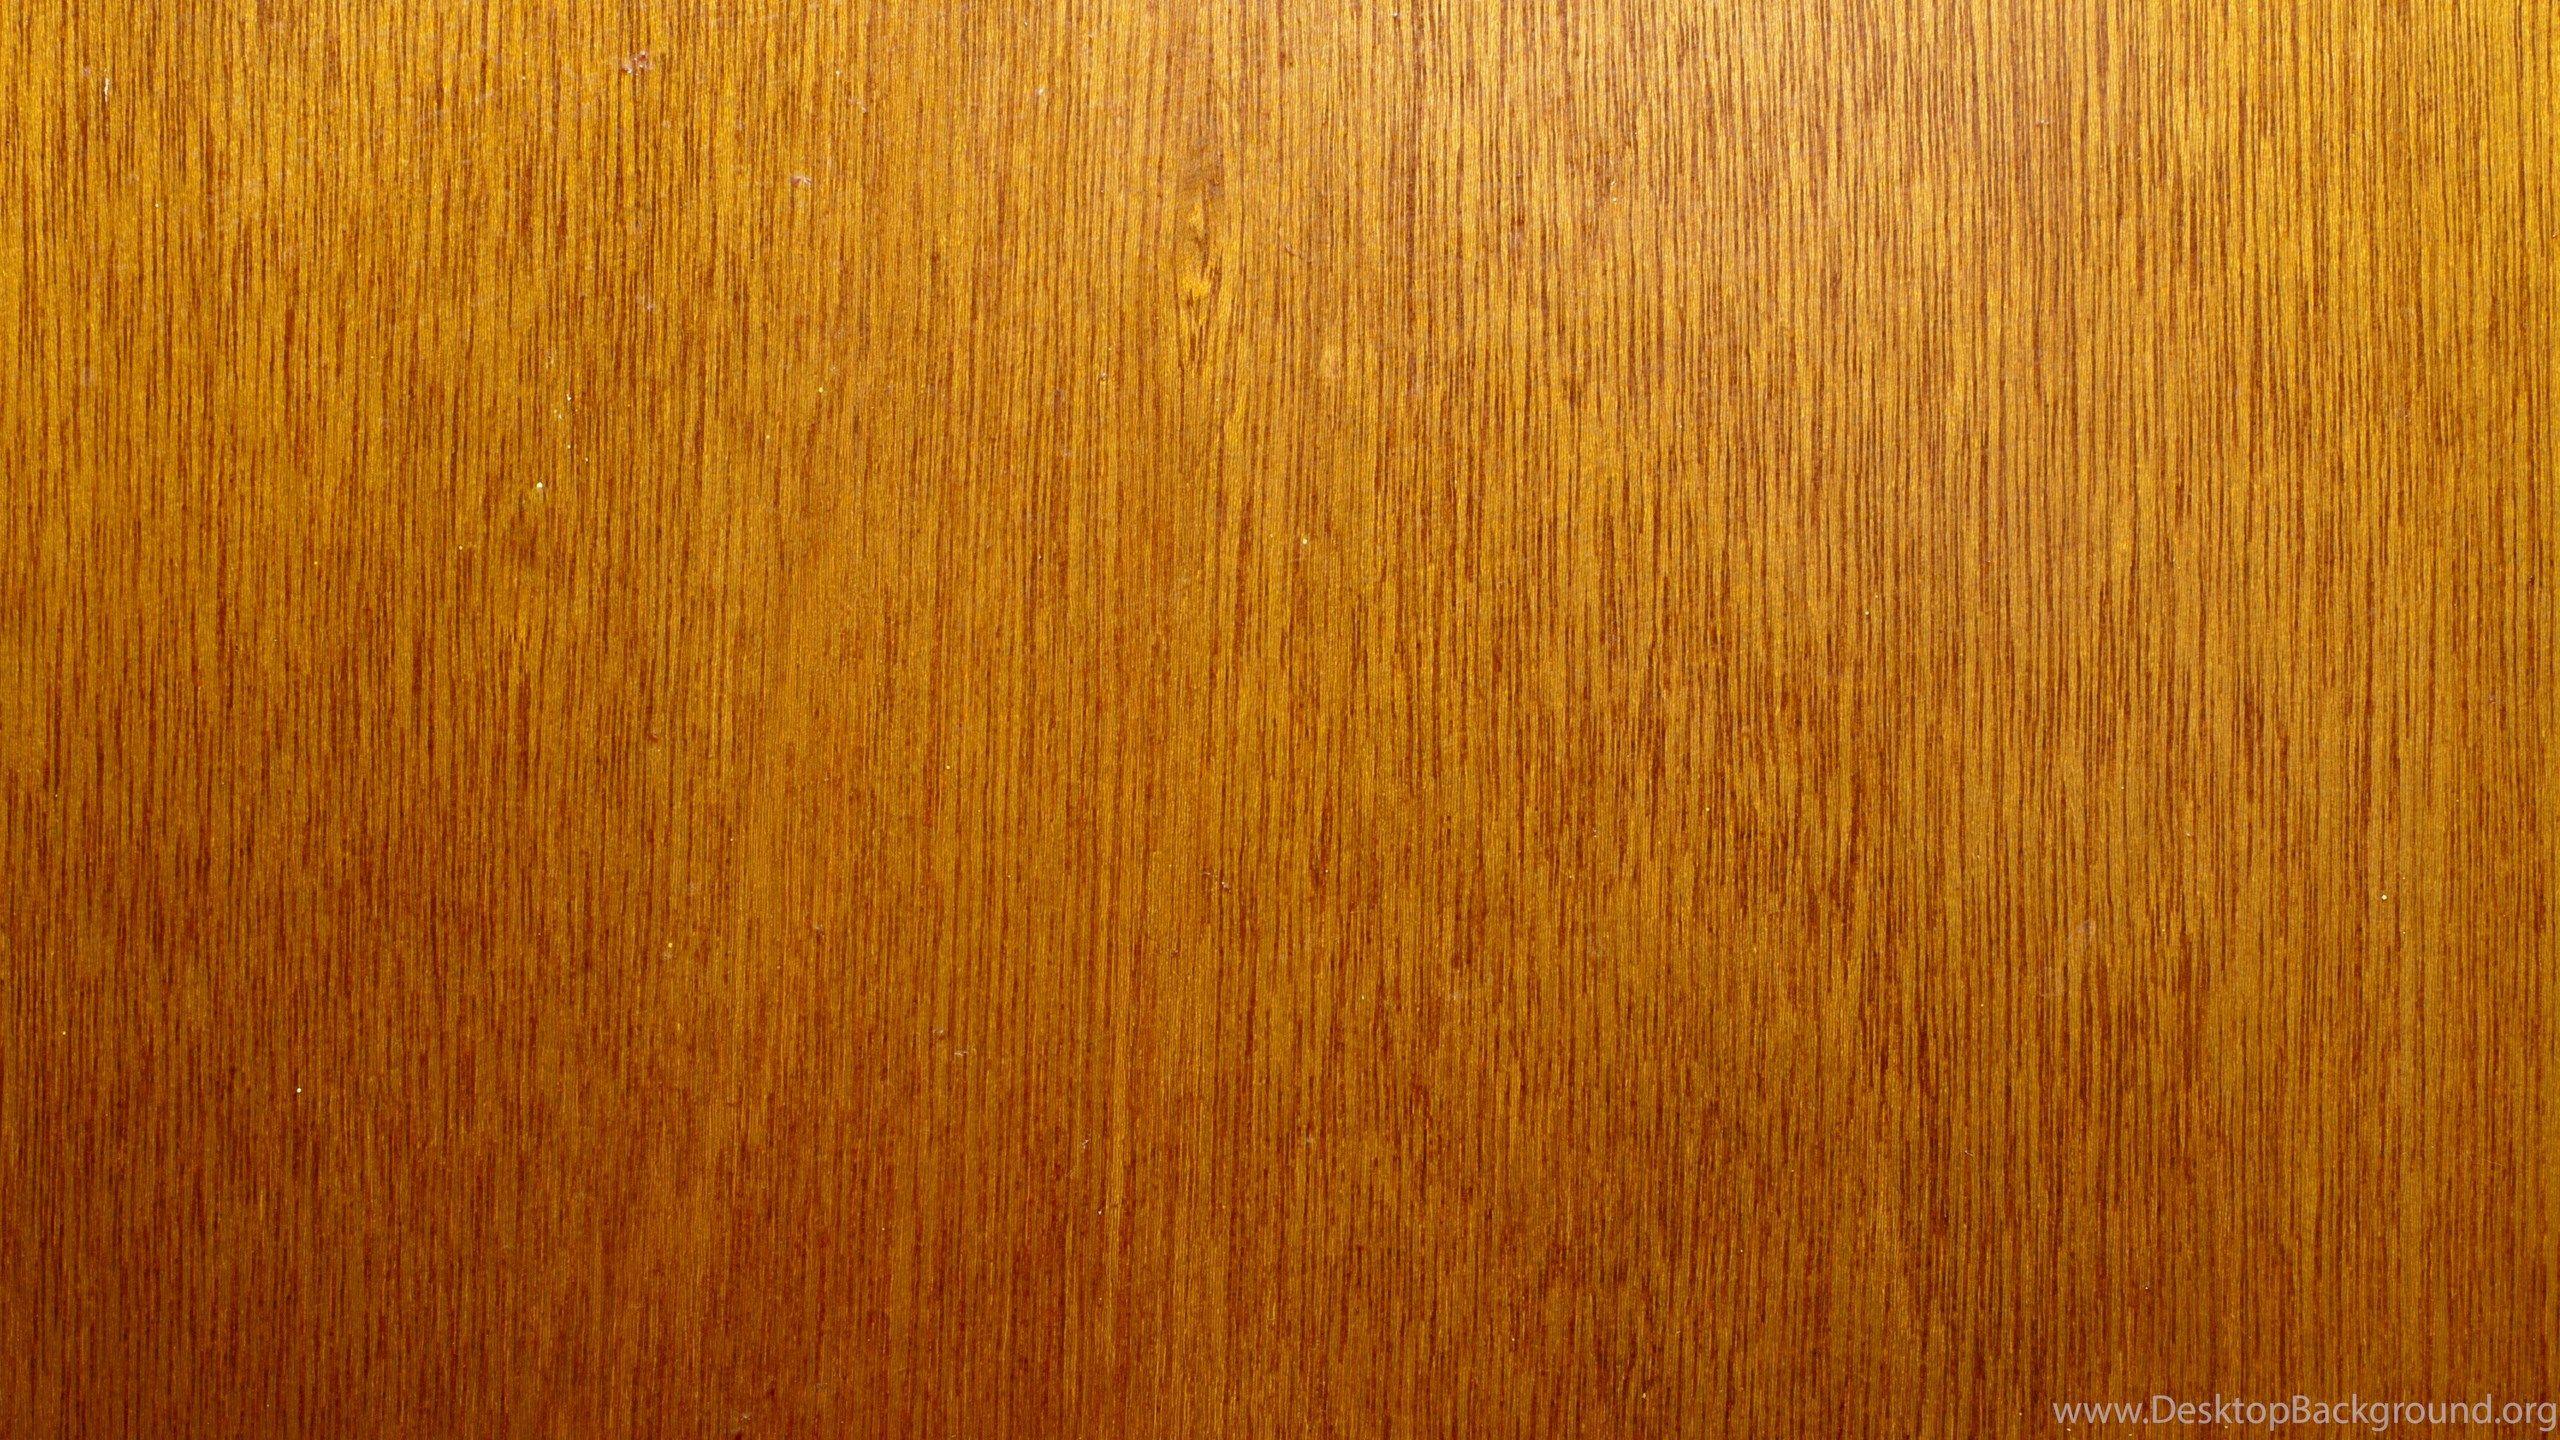 Mahogany Wood Grain Desktop Background